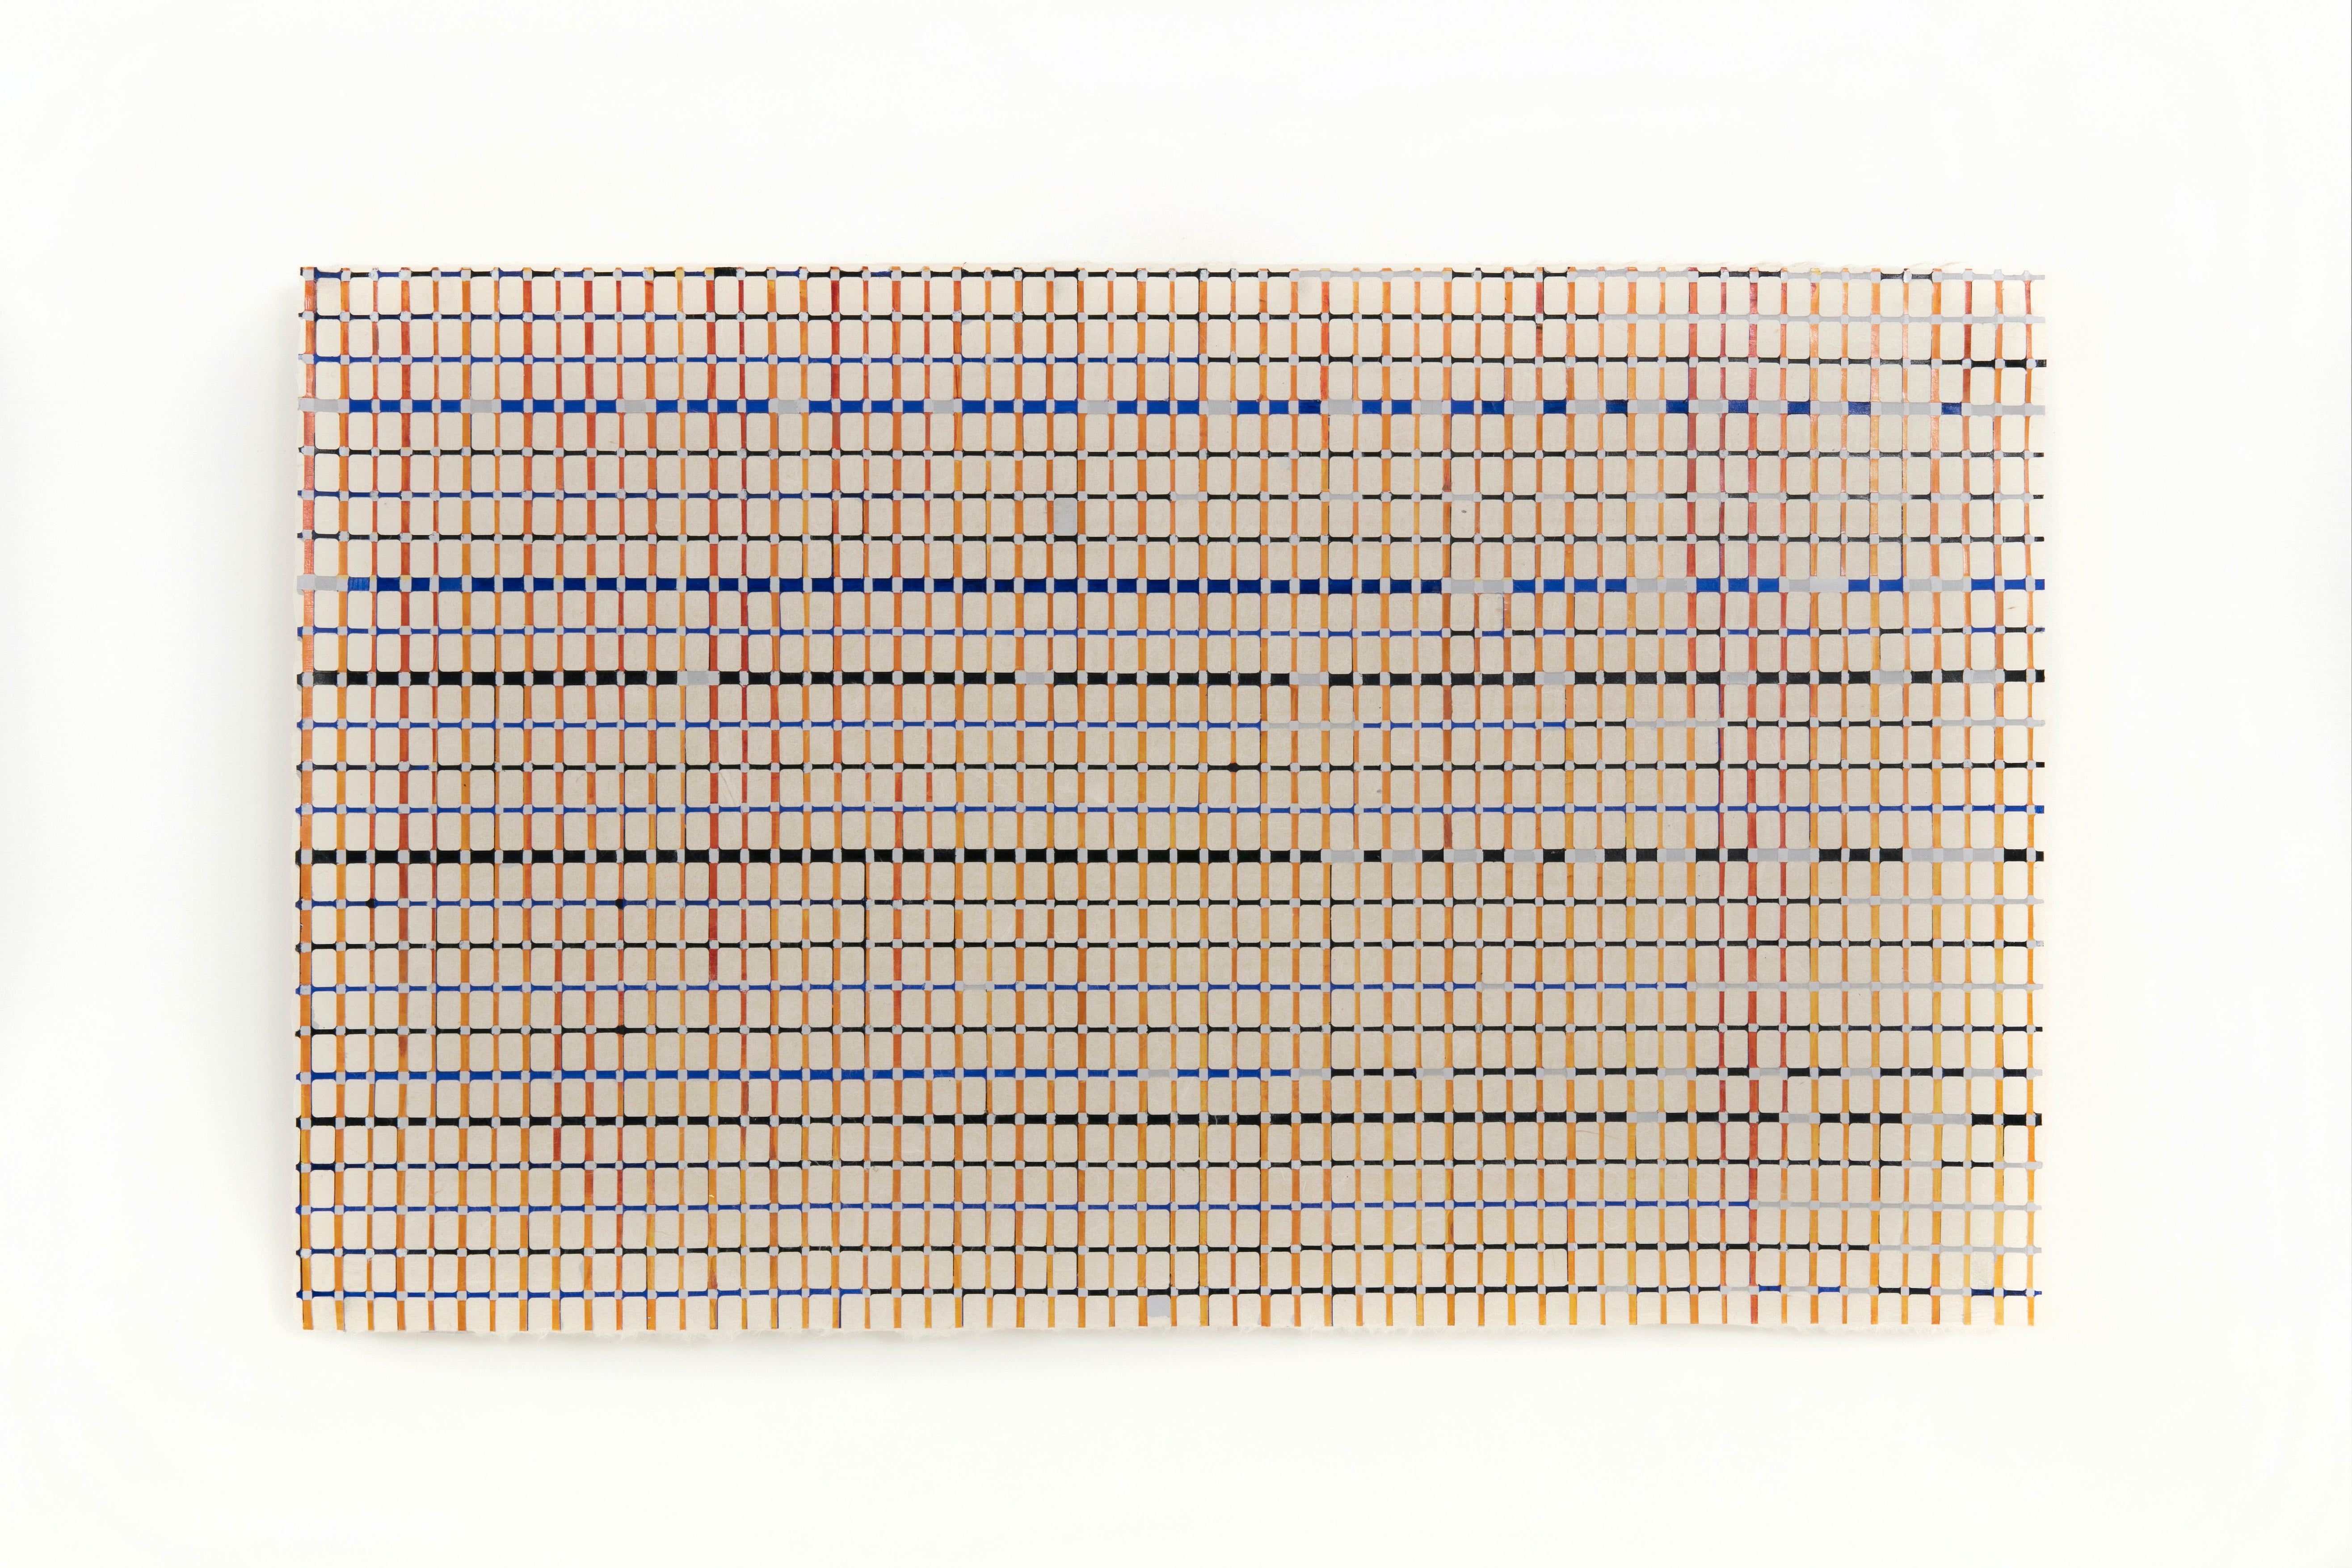 Jane Lackey, Orange/blue/black line variations 2, 2023, 14 x 23 inches, paint on kozo paper